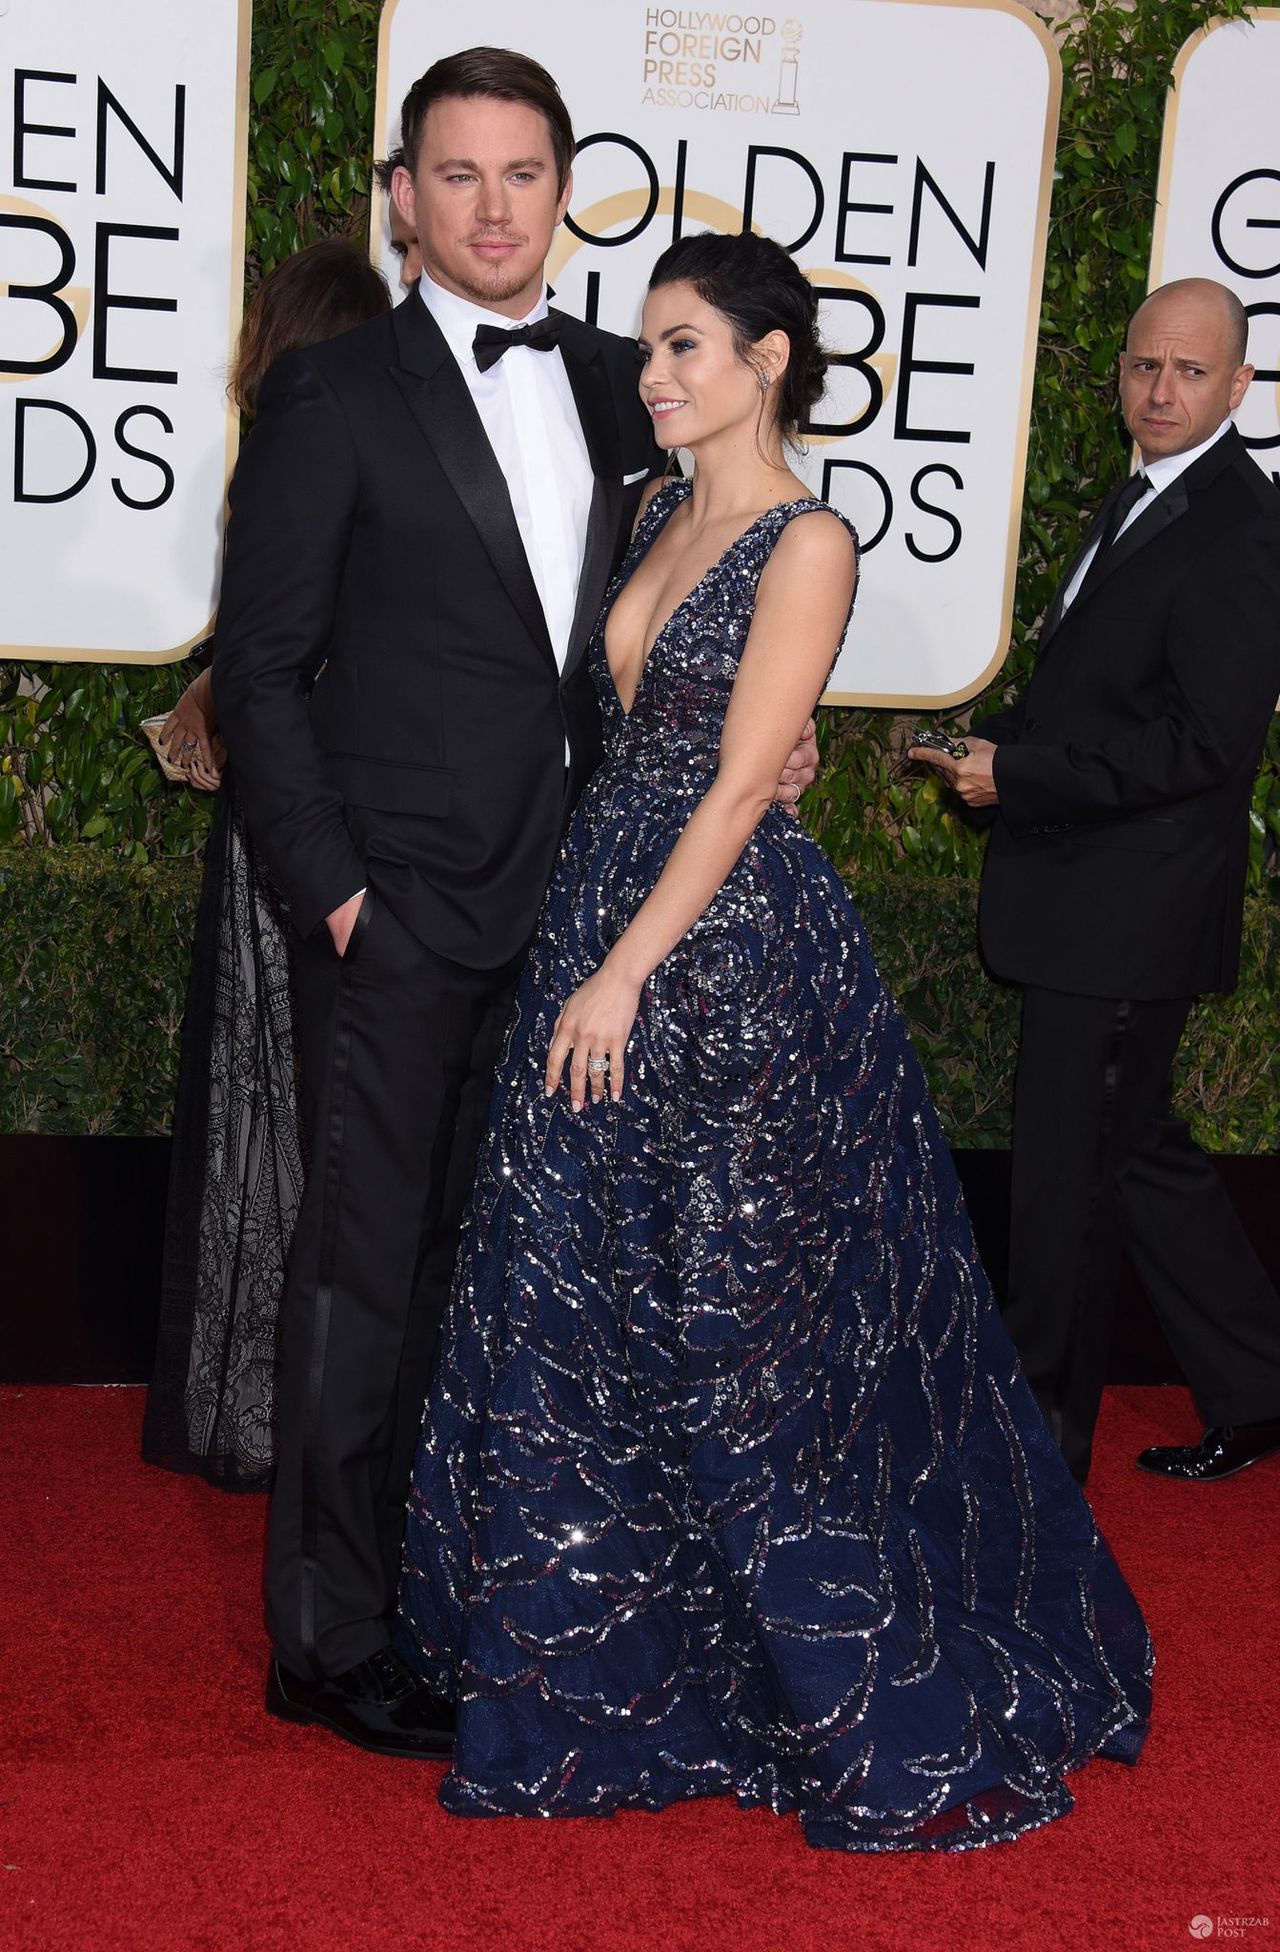 Channing Tatum i jego żona Jenna Dewan-Tatum (w sukni Zuhair Murad), Złote Globy 2016 (fot. ONS)